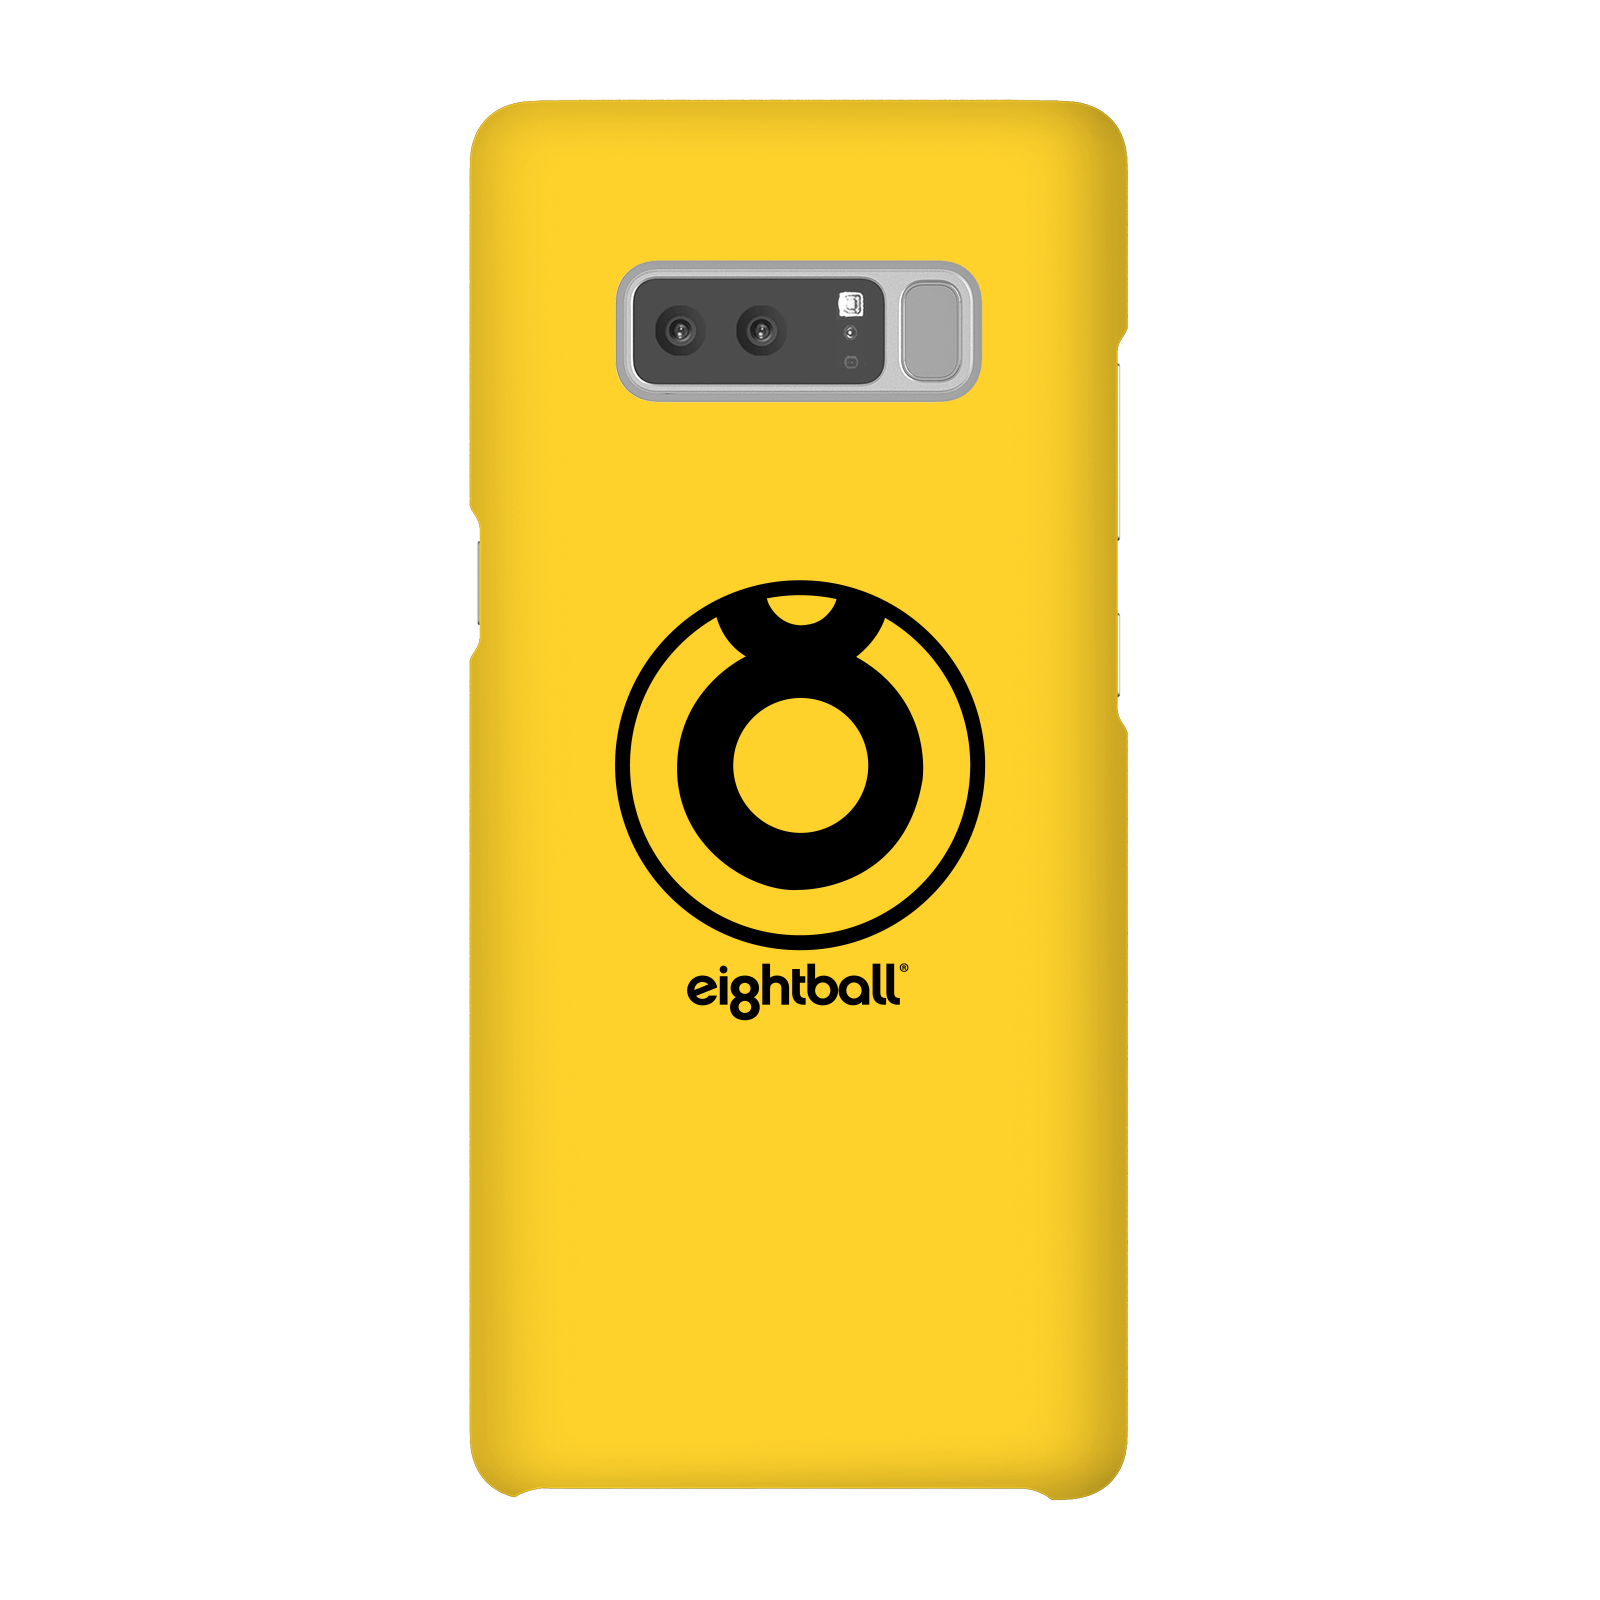 Funda Móvil Ei8htball Large Circle Logo para iPhone y Android - Samsung Note 8 - Carcasa rígida - Mate